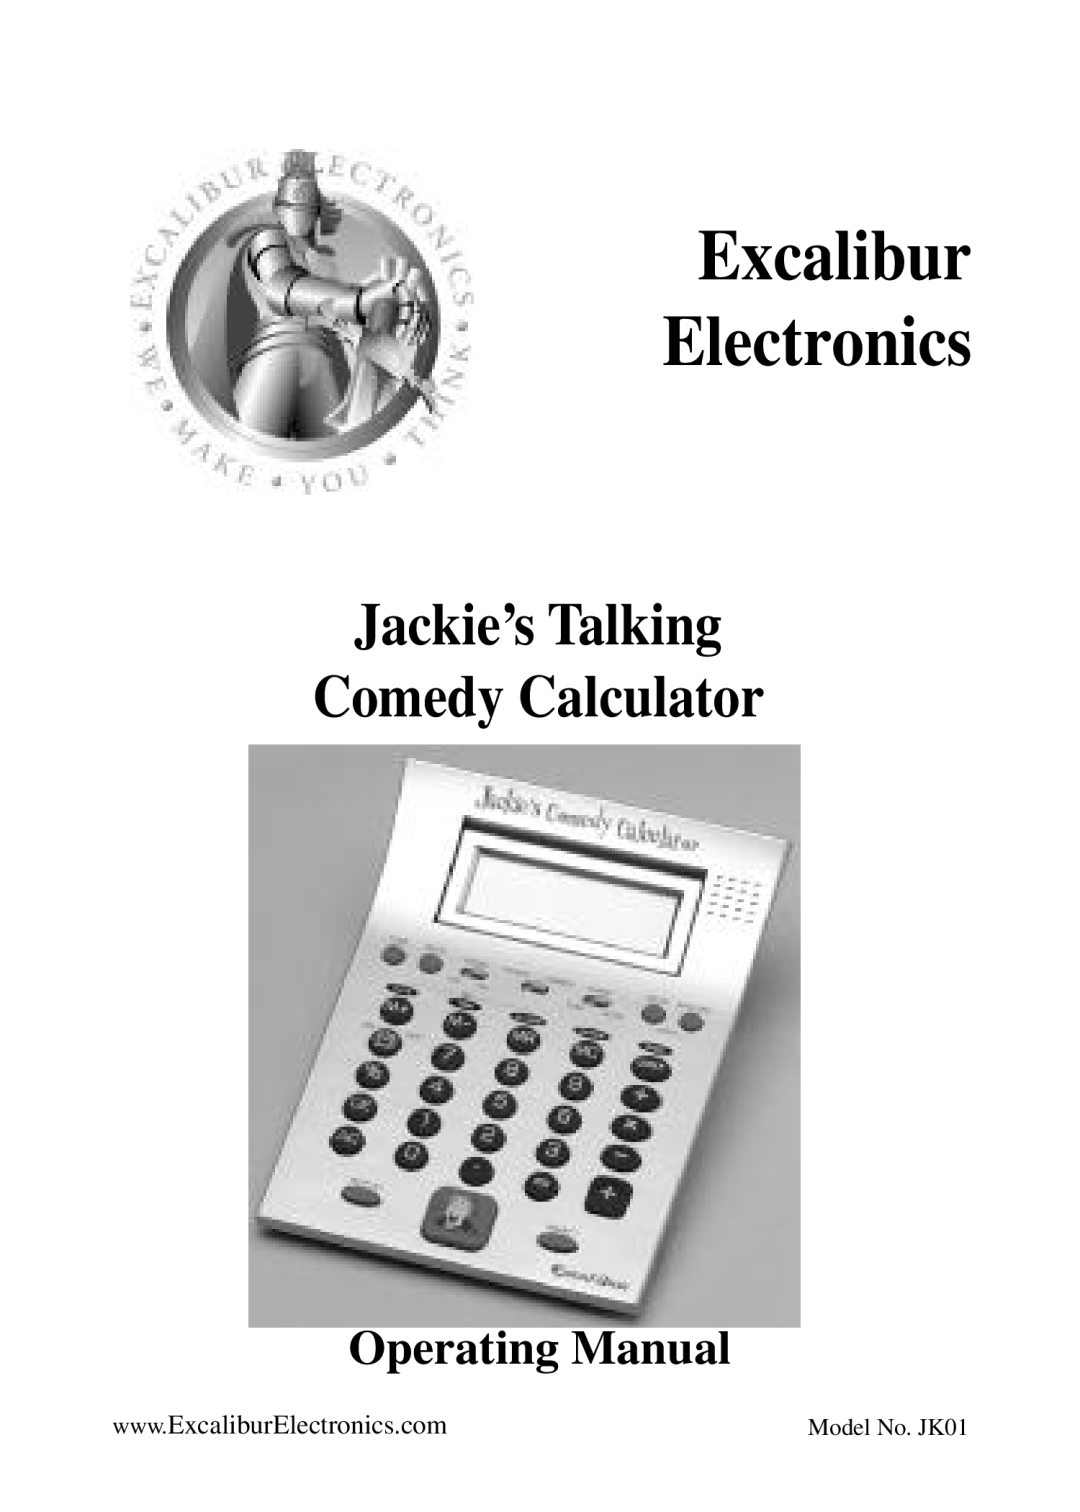 Excalibur electronic JK01 manual Operating Manual, Excalibur Electronics, Jackie’s Talking Comedy Calculator 